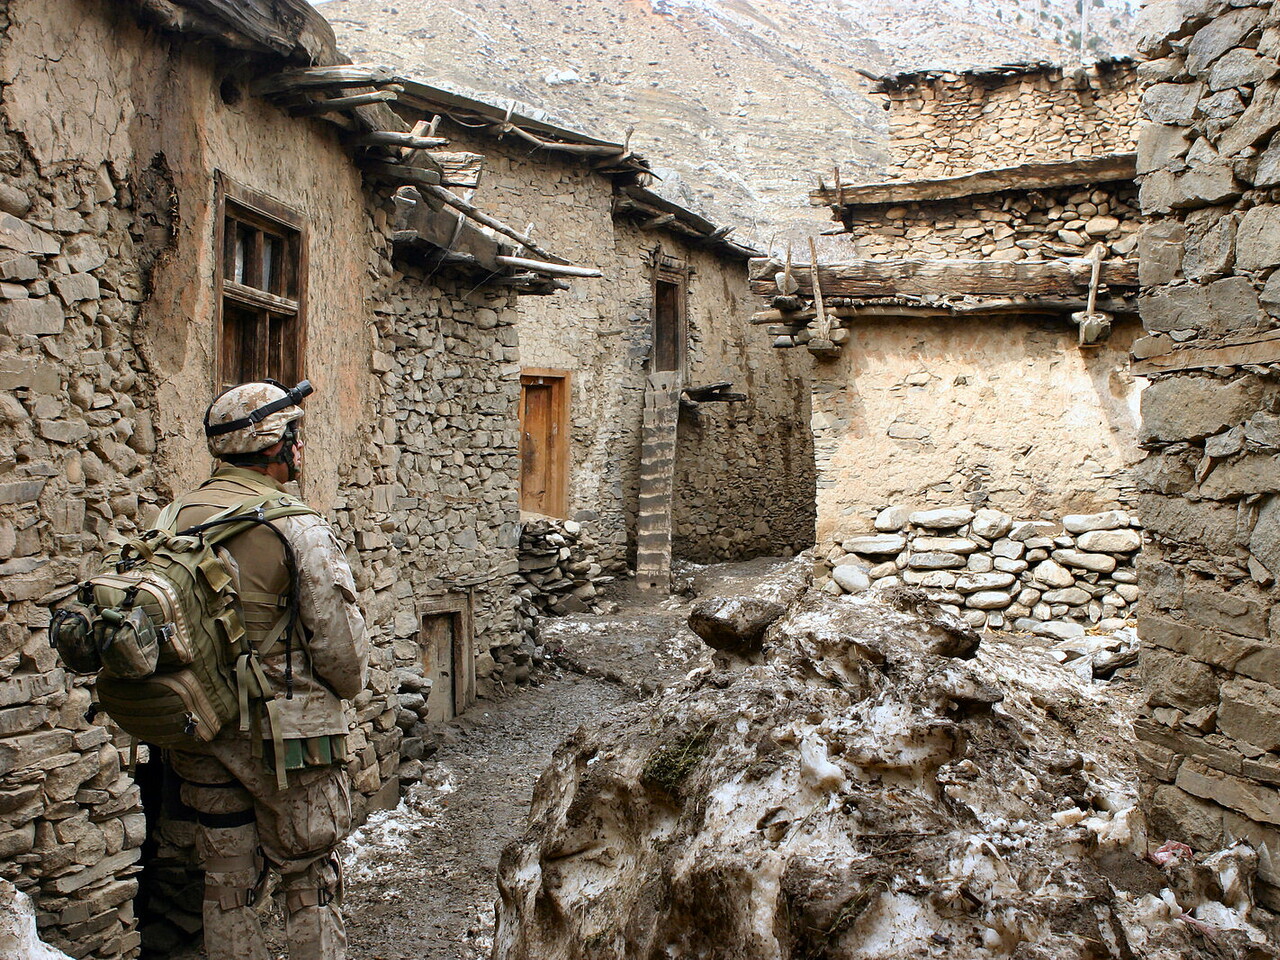 Soldier walking through alley between houses in desert terrain